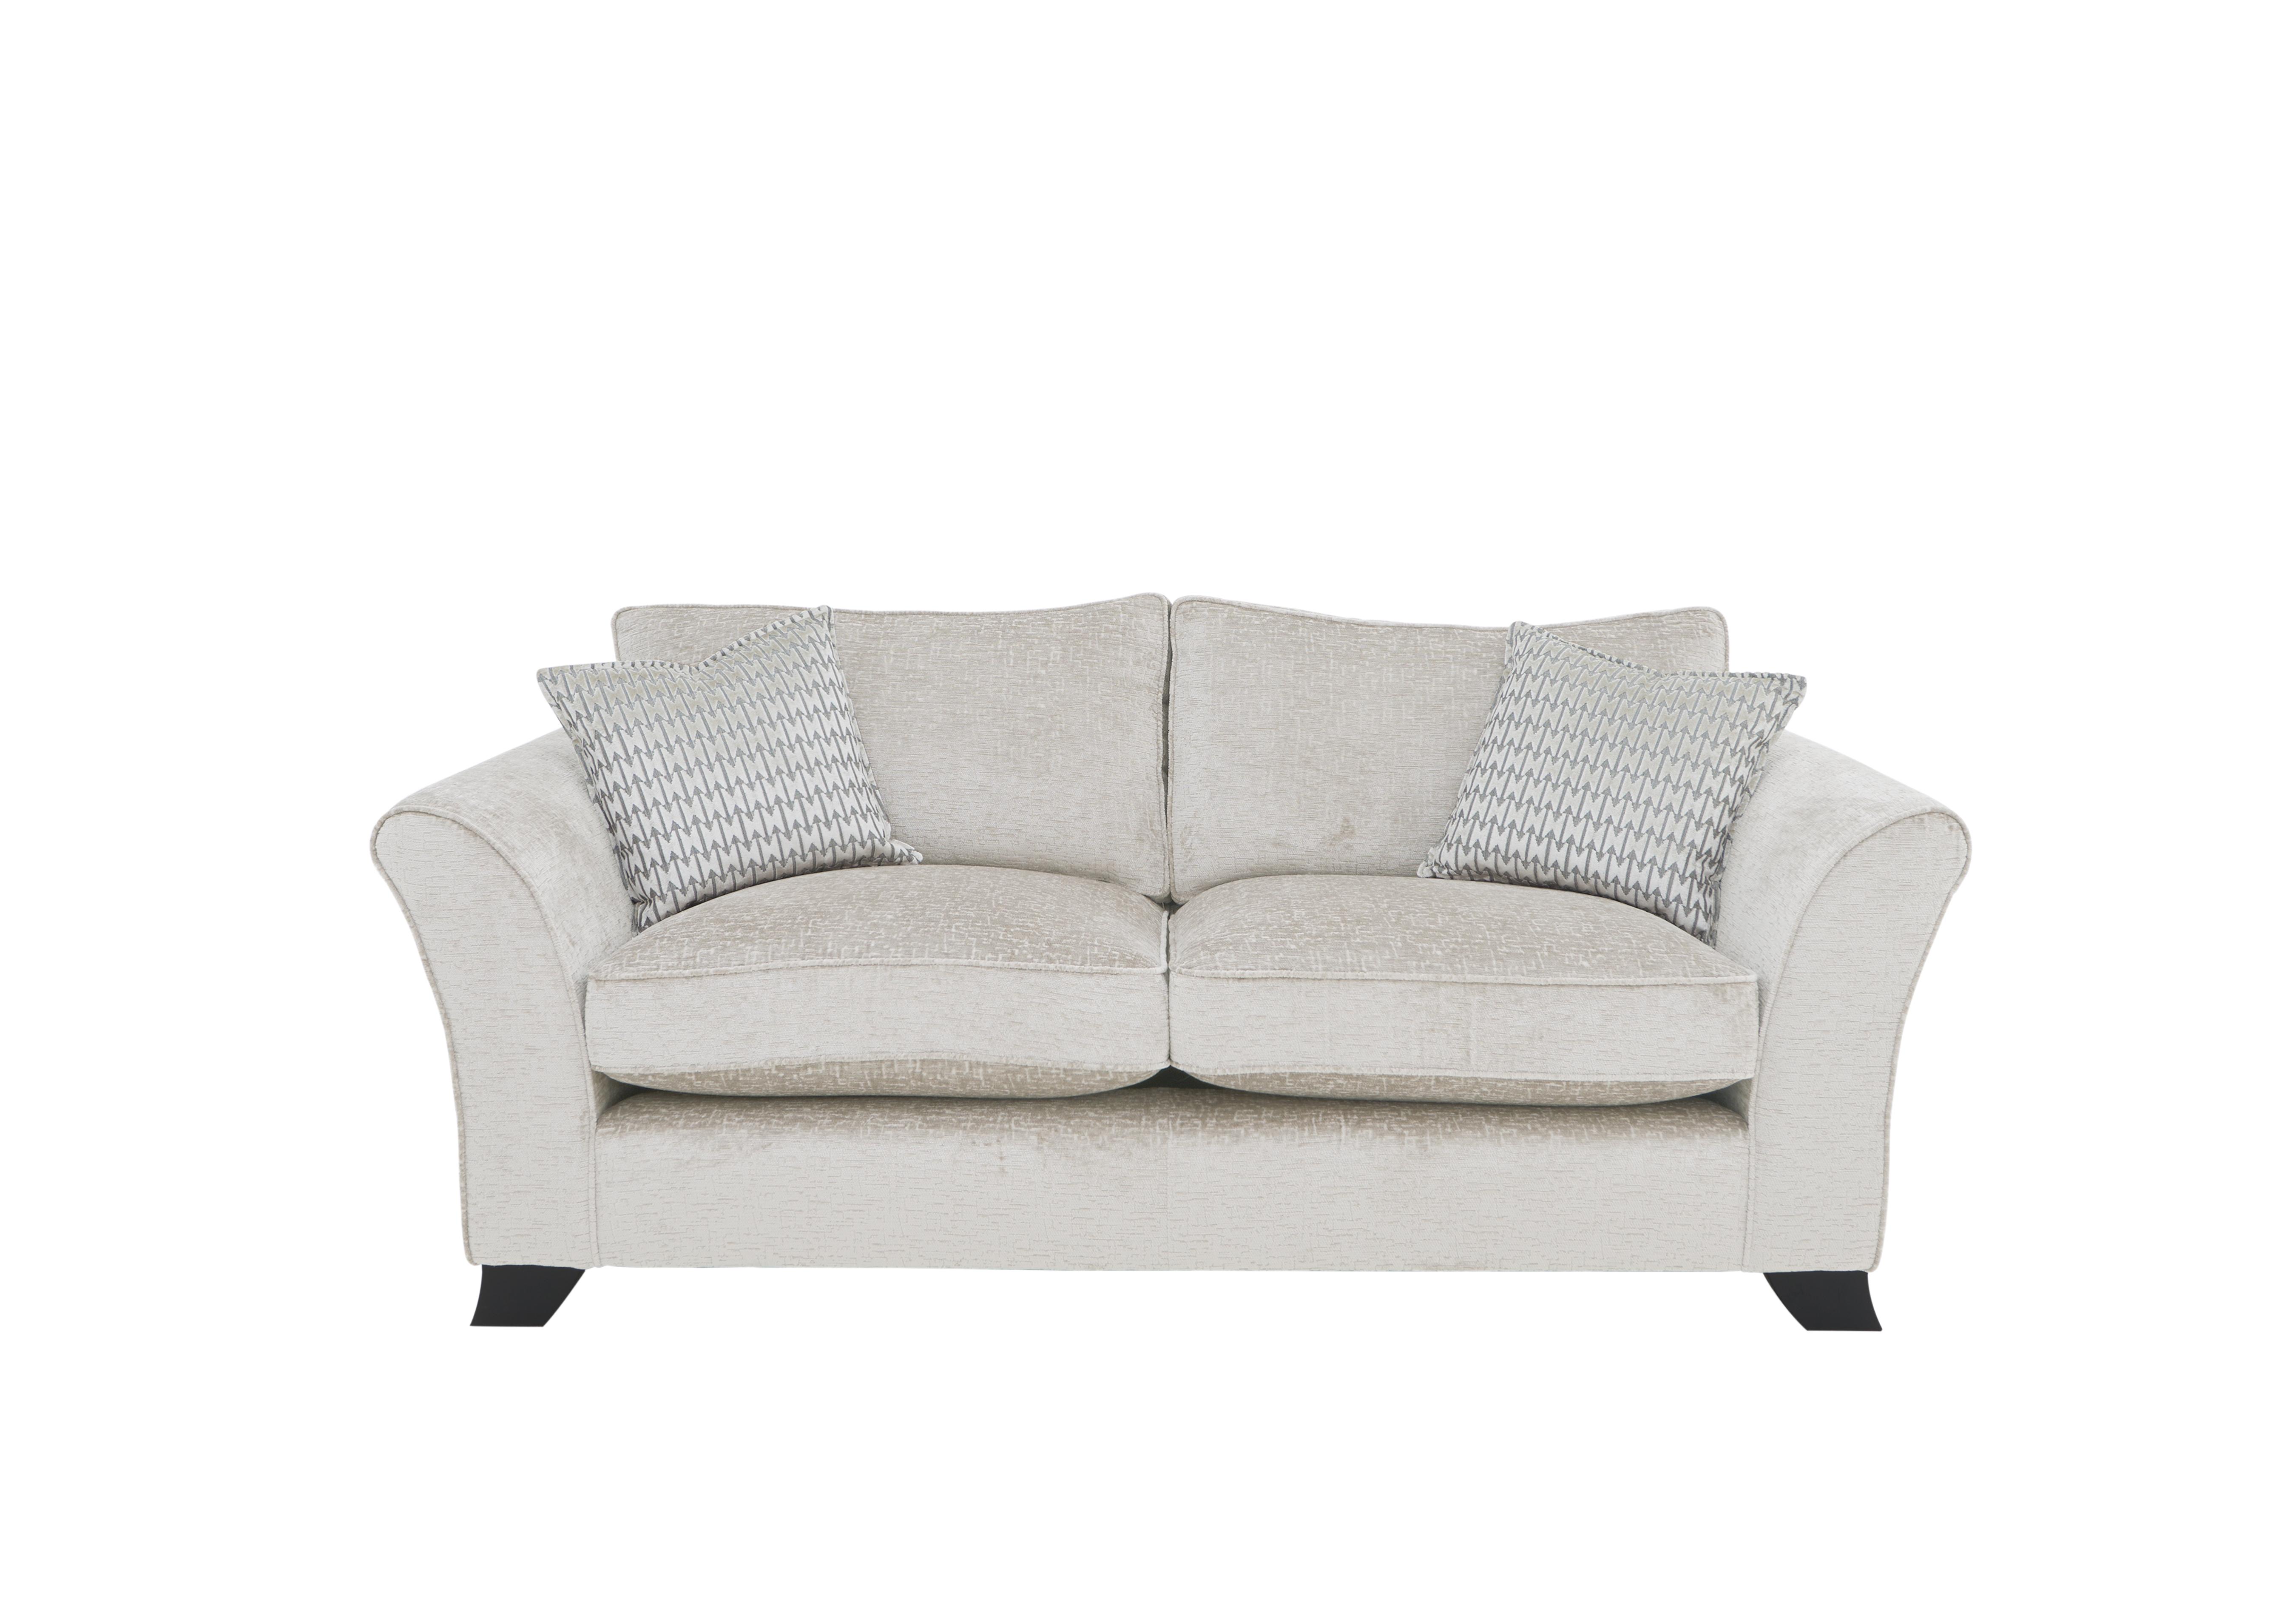 Sasha 3 Seater Classic Back Sofa in Alexandra Natural on Furniture Village